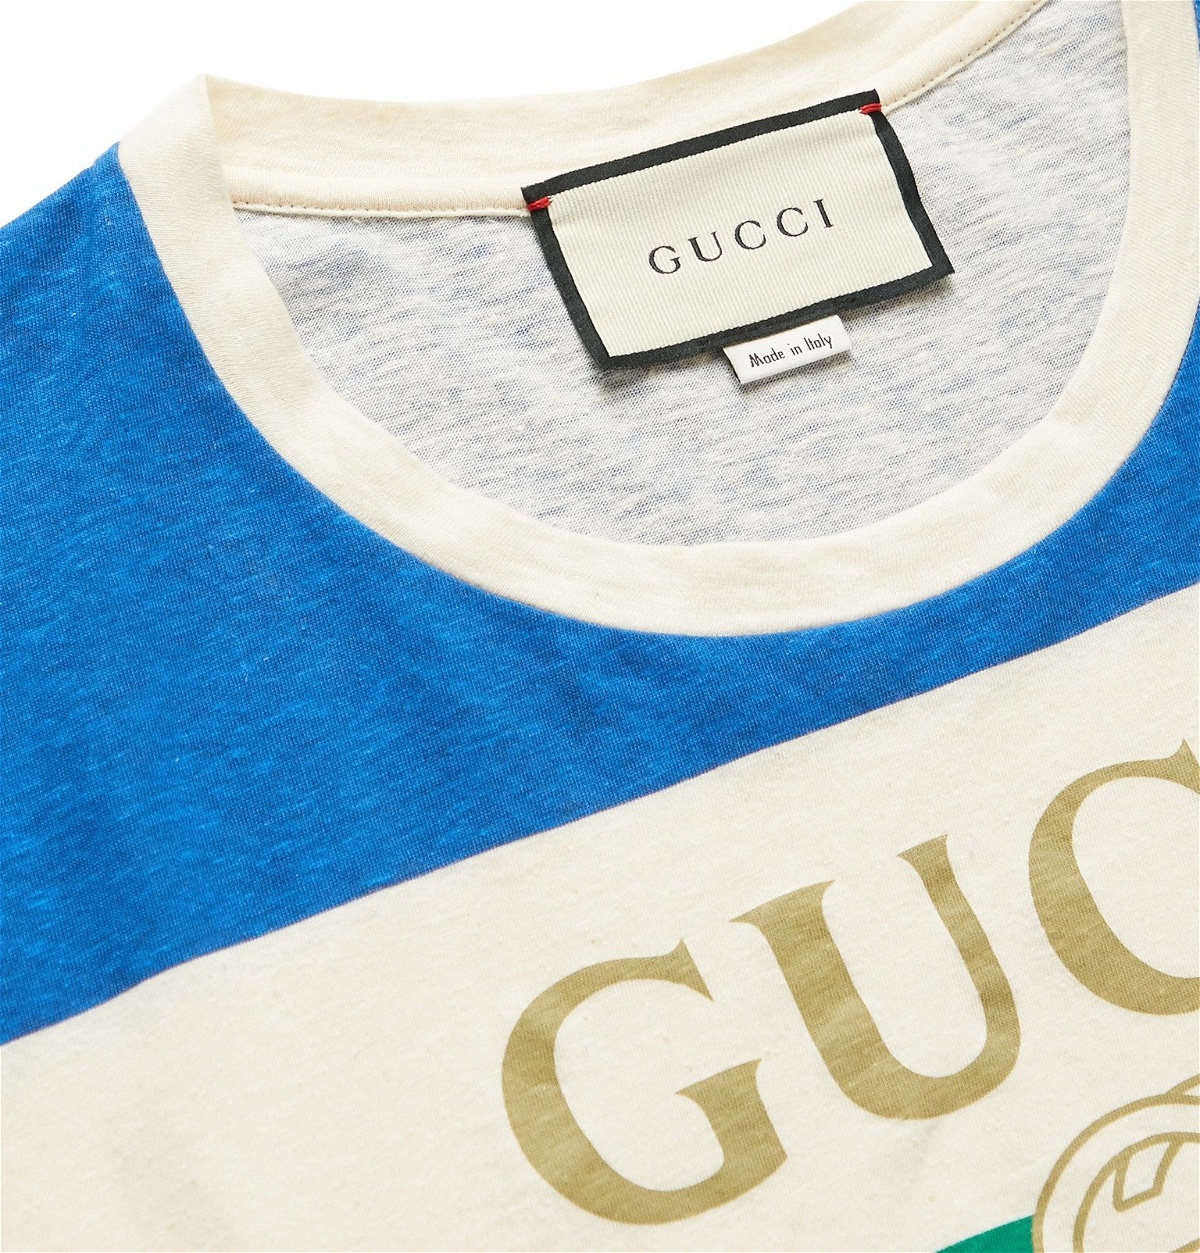 Gucci - Logo-Print Striped Cotton and Hemp-Blend T-Shirt - Blue Gucci